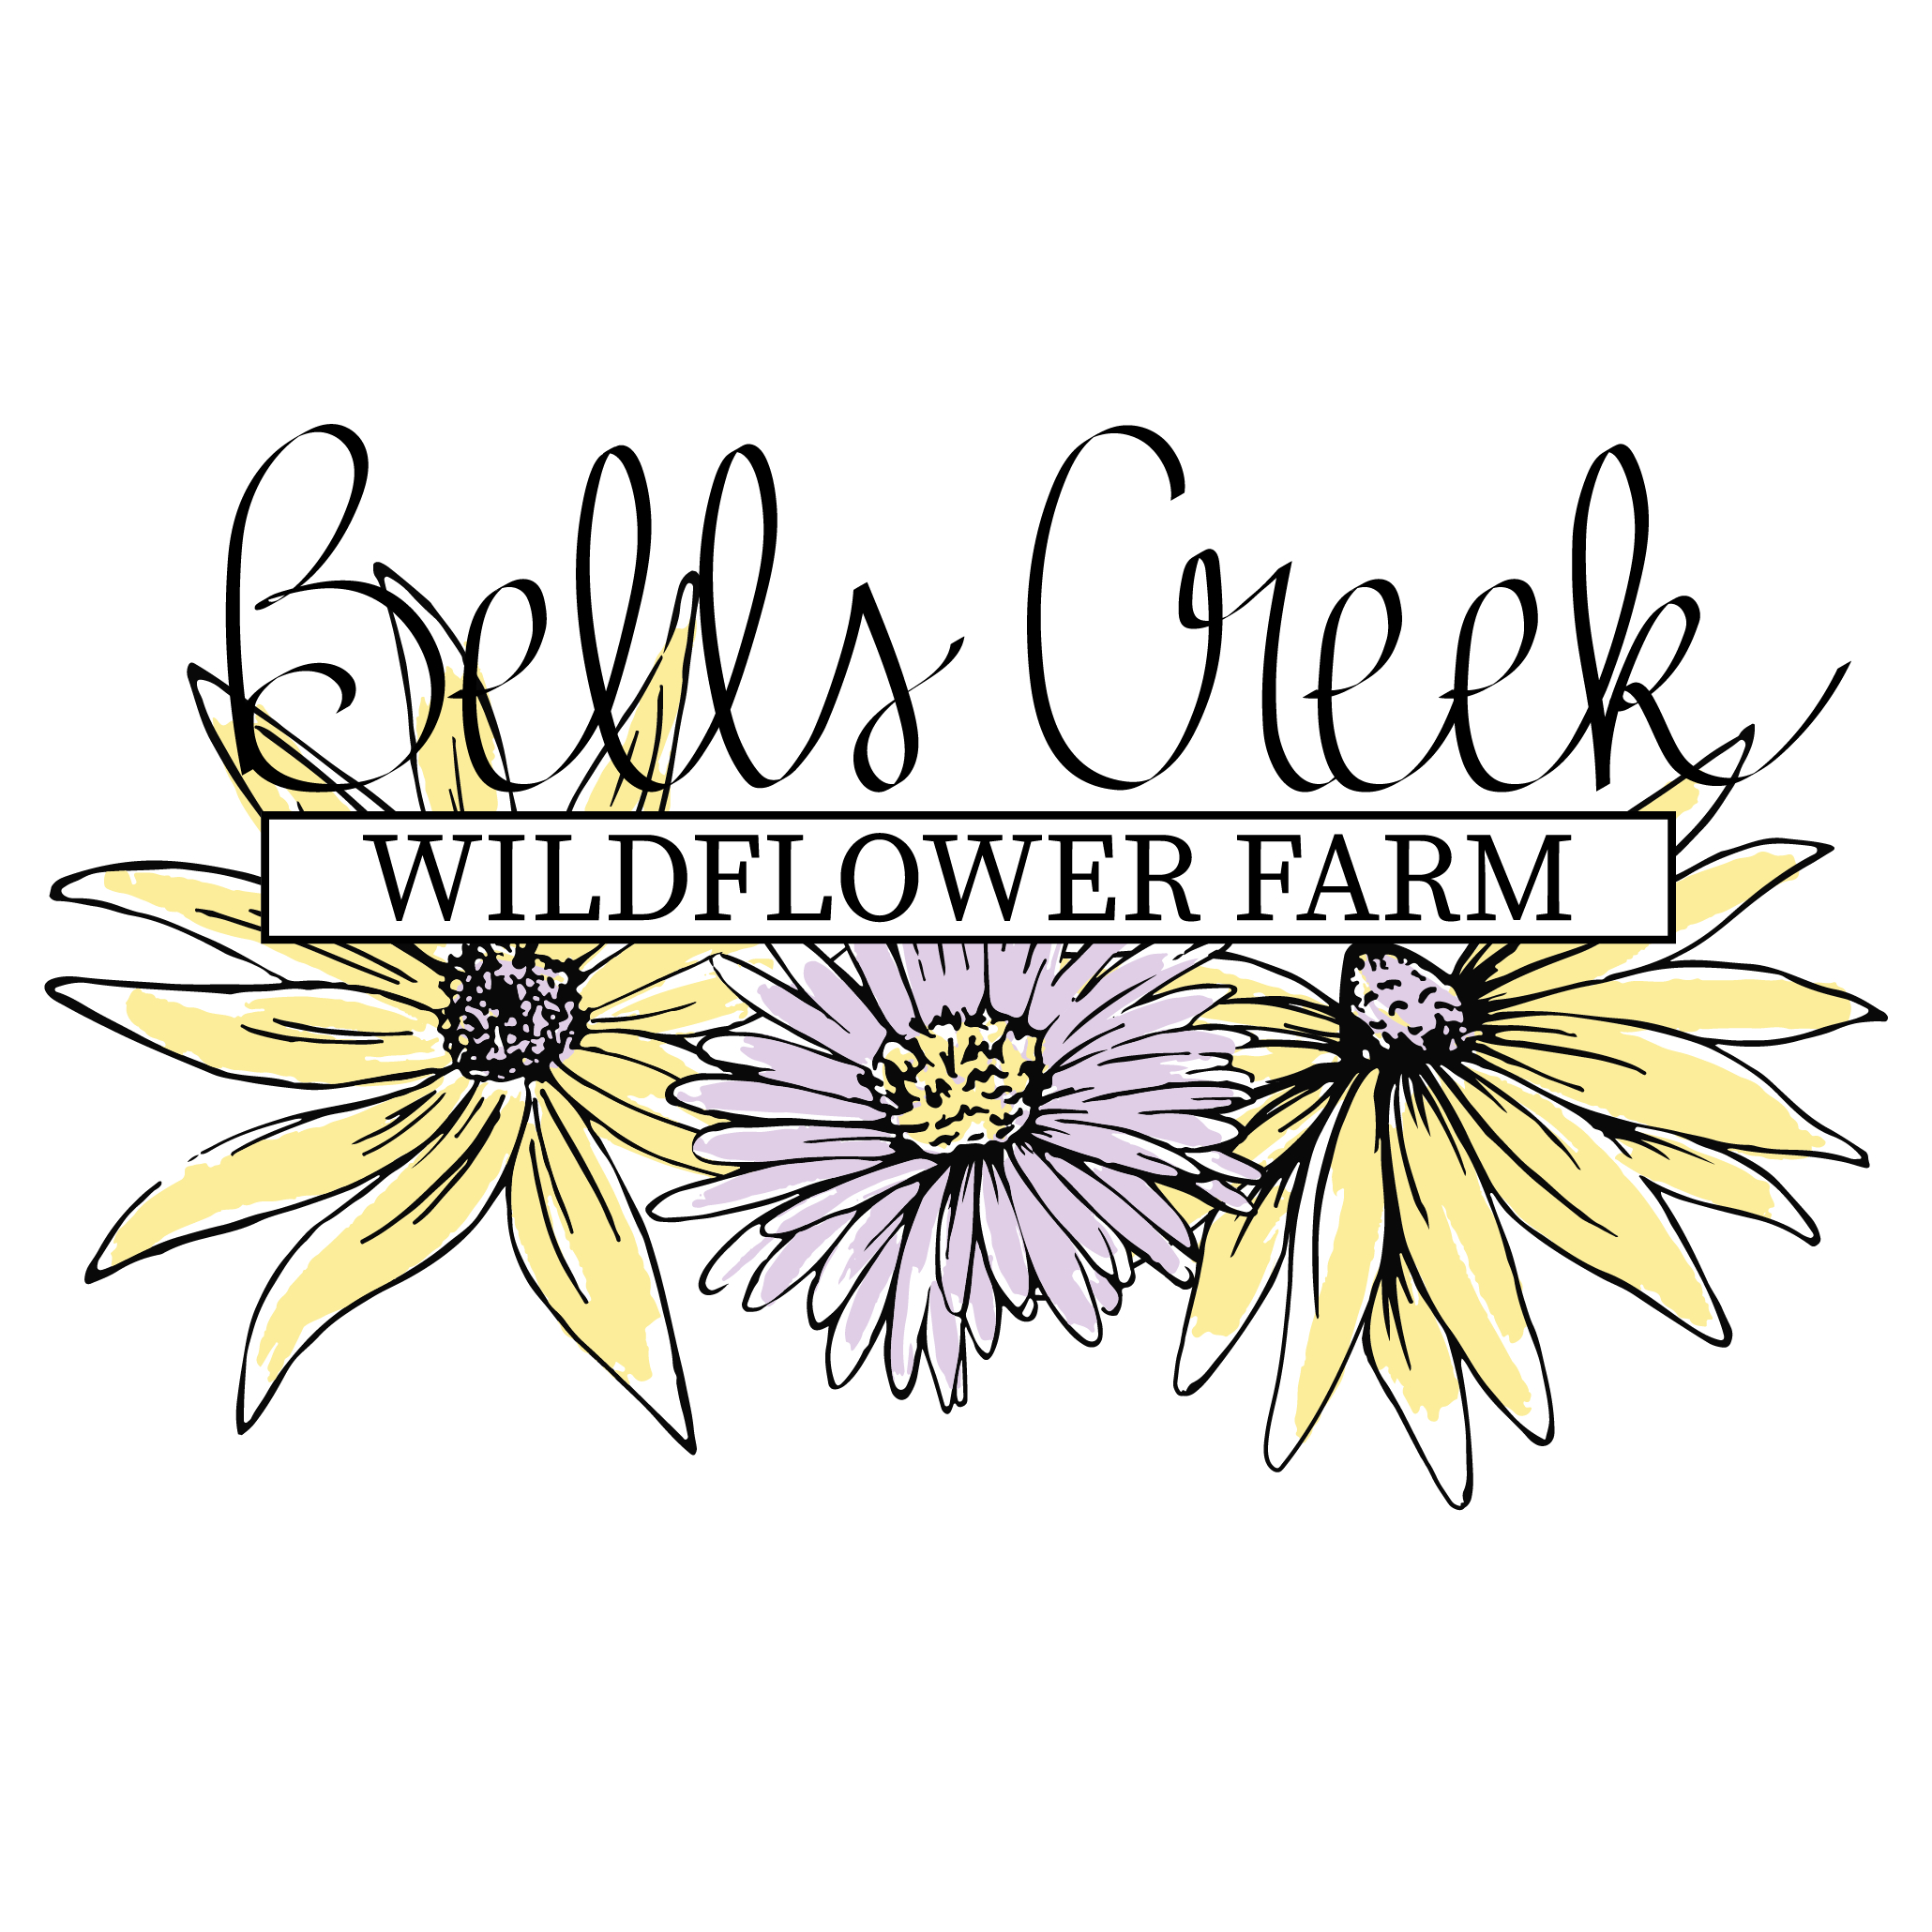 Bells Creek Wildflower Farm